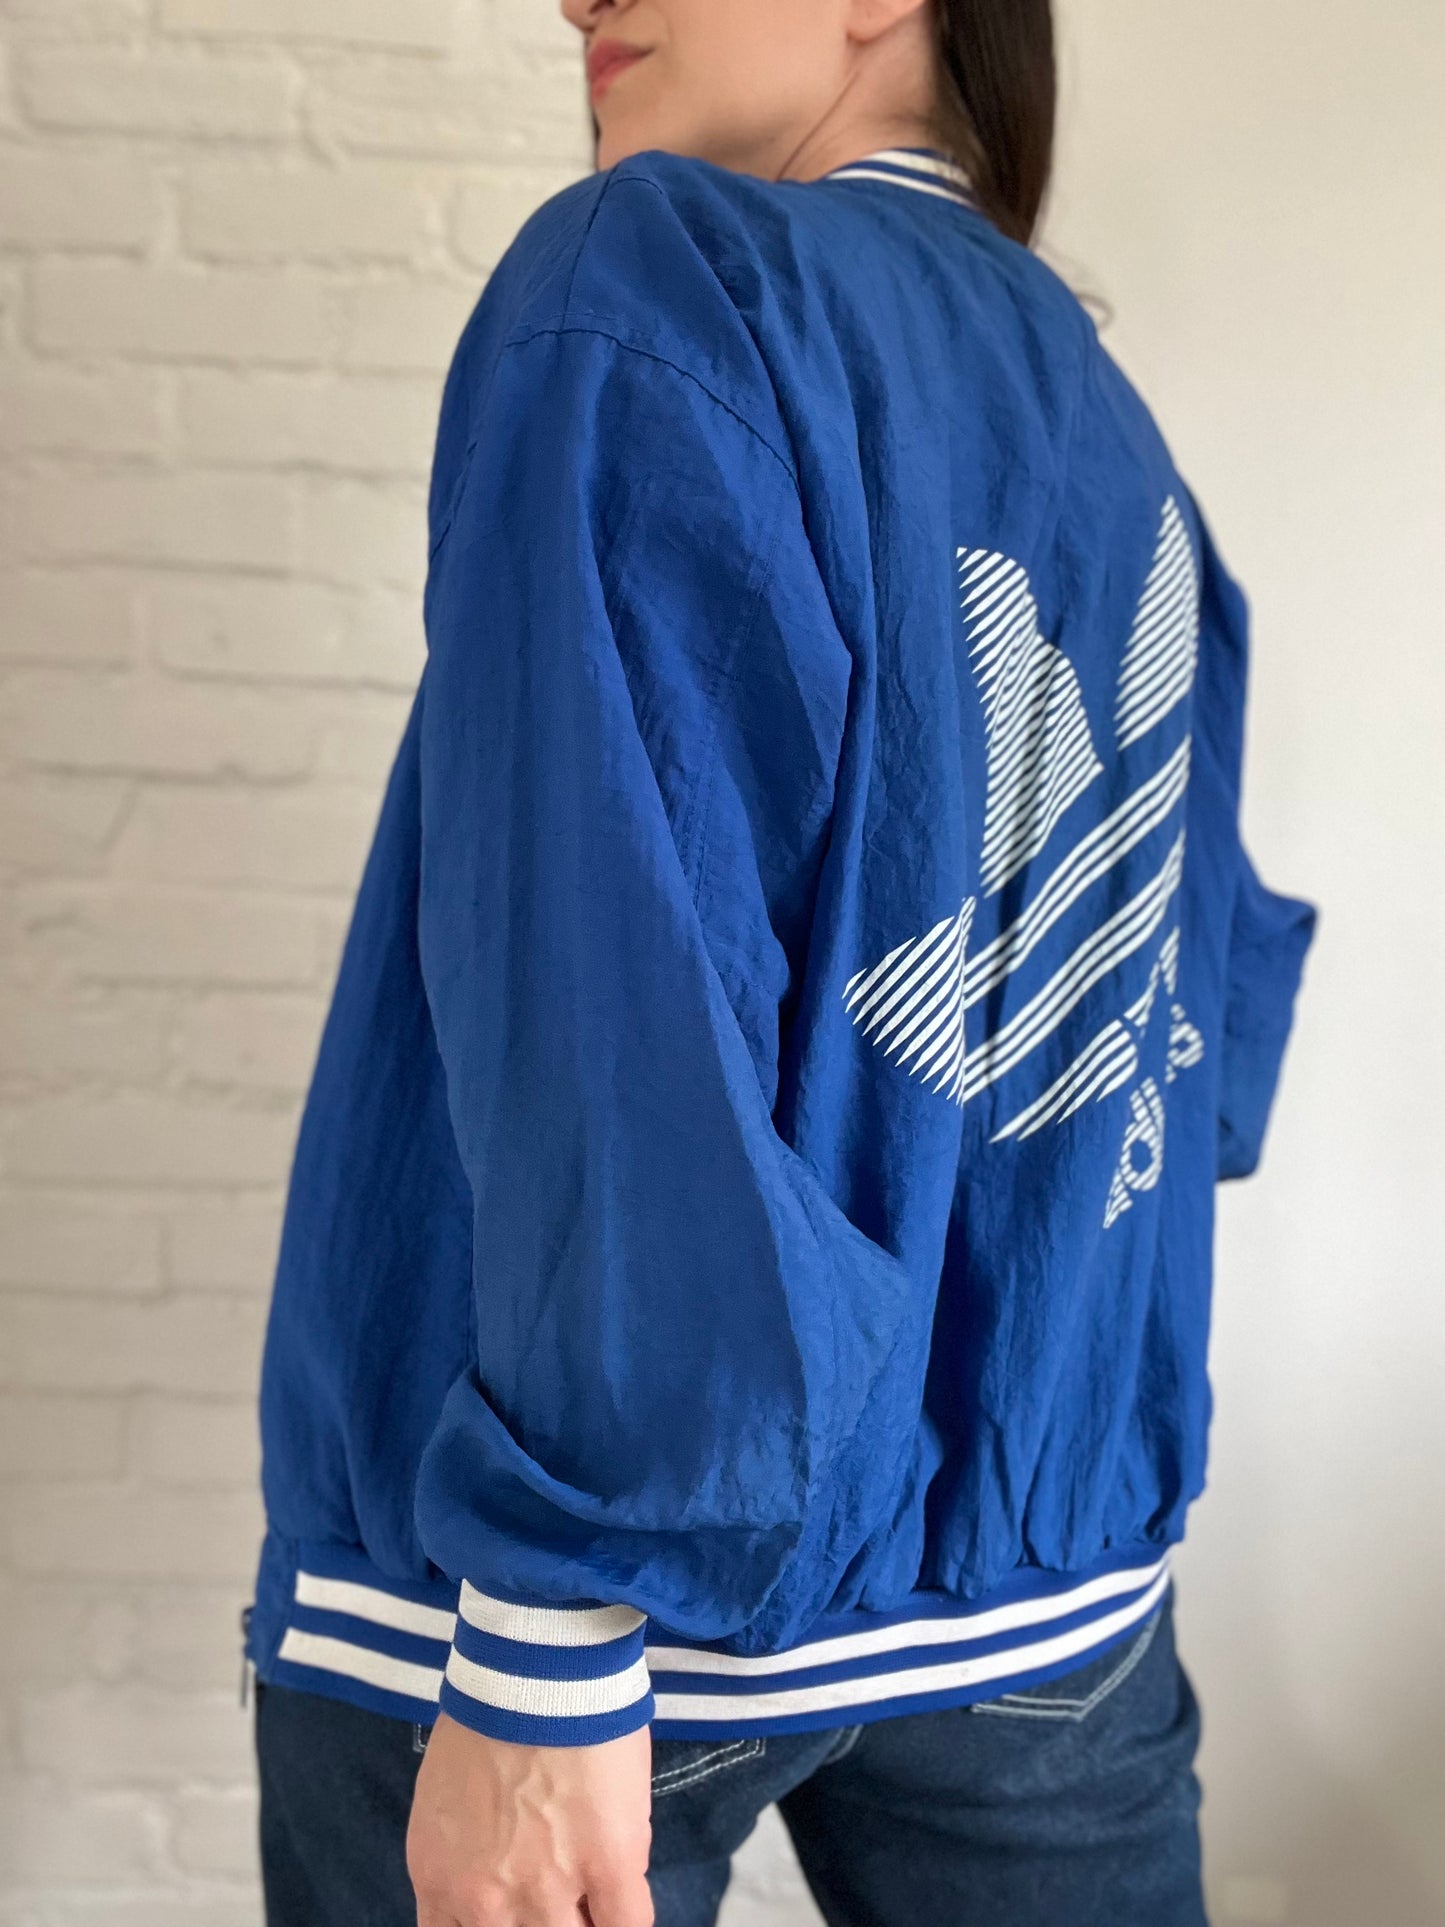 Vintage Adidas Track Jacket - Size Mens M